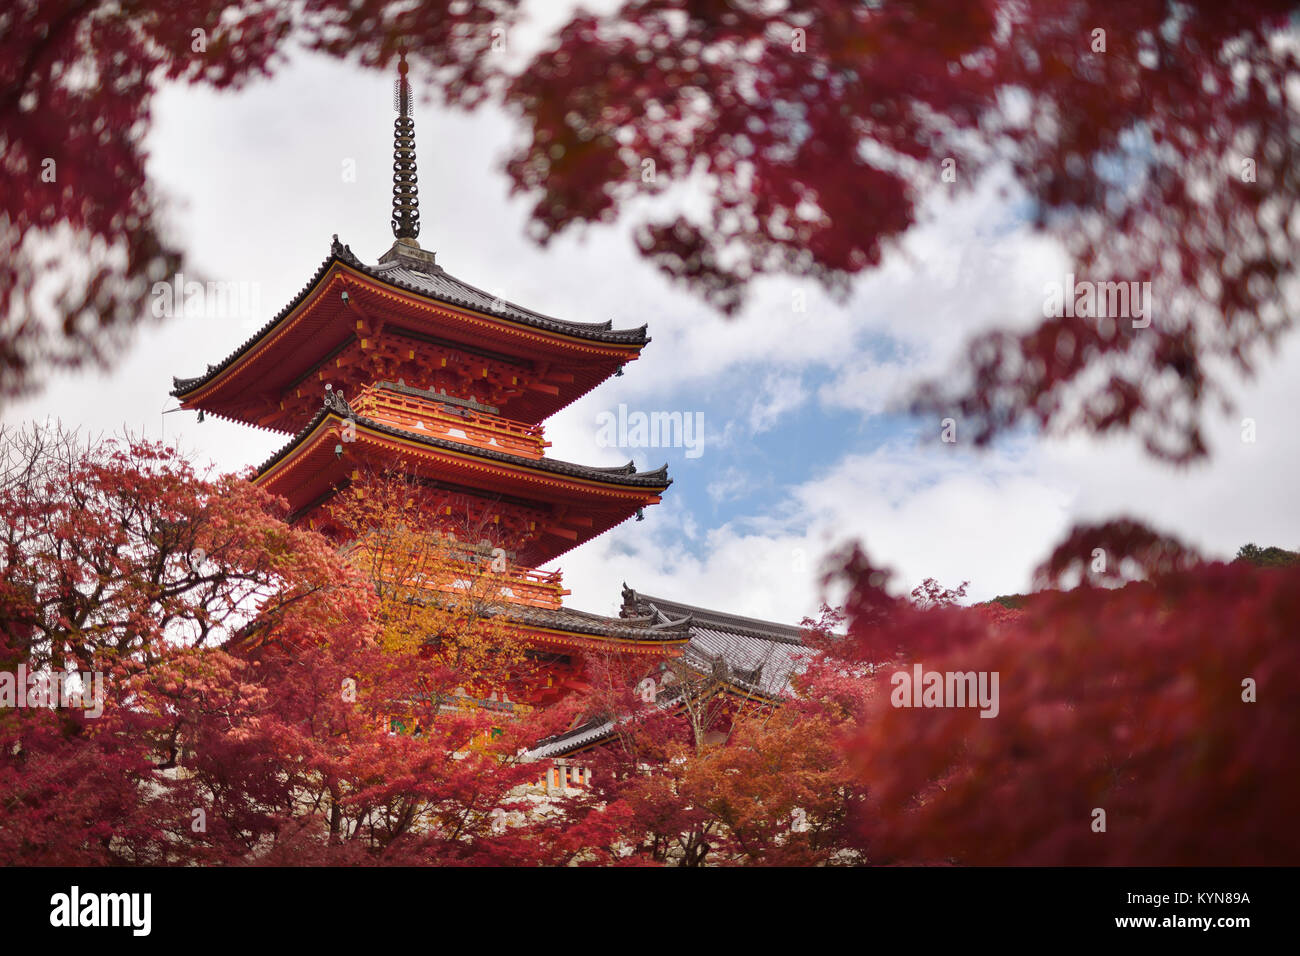 License and prints at MaximImages.com - Kiyomizu-dera, Kyoto, Japan travel stock photo Stock Photo